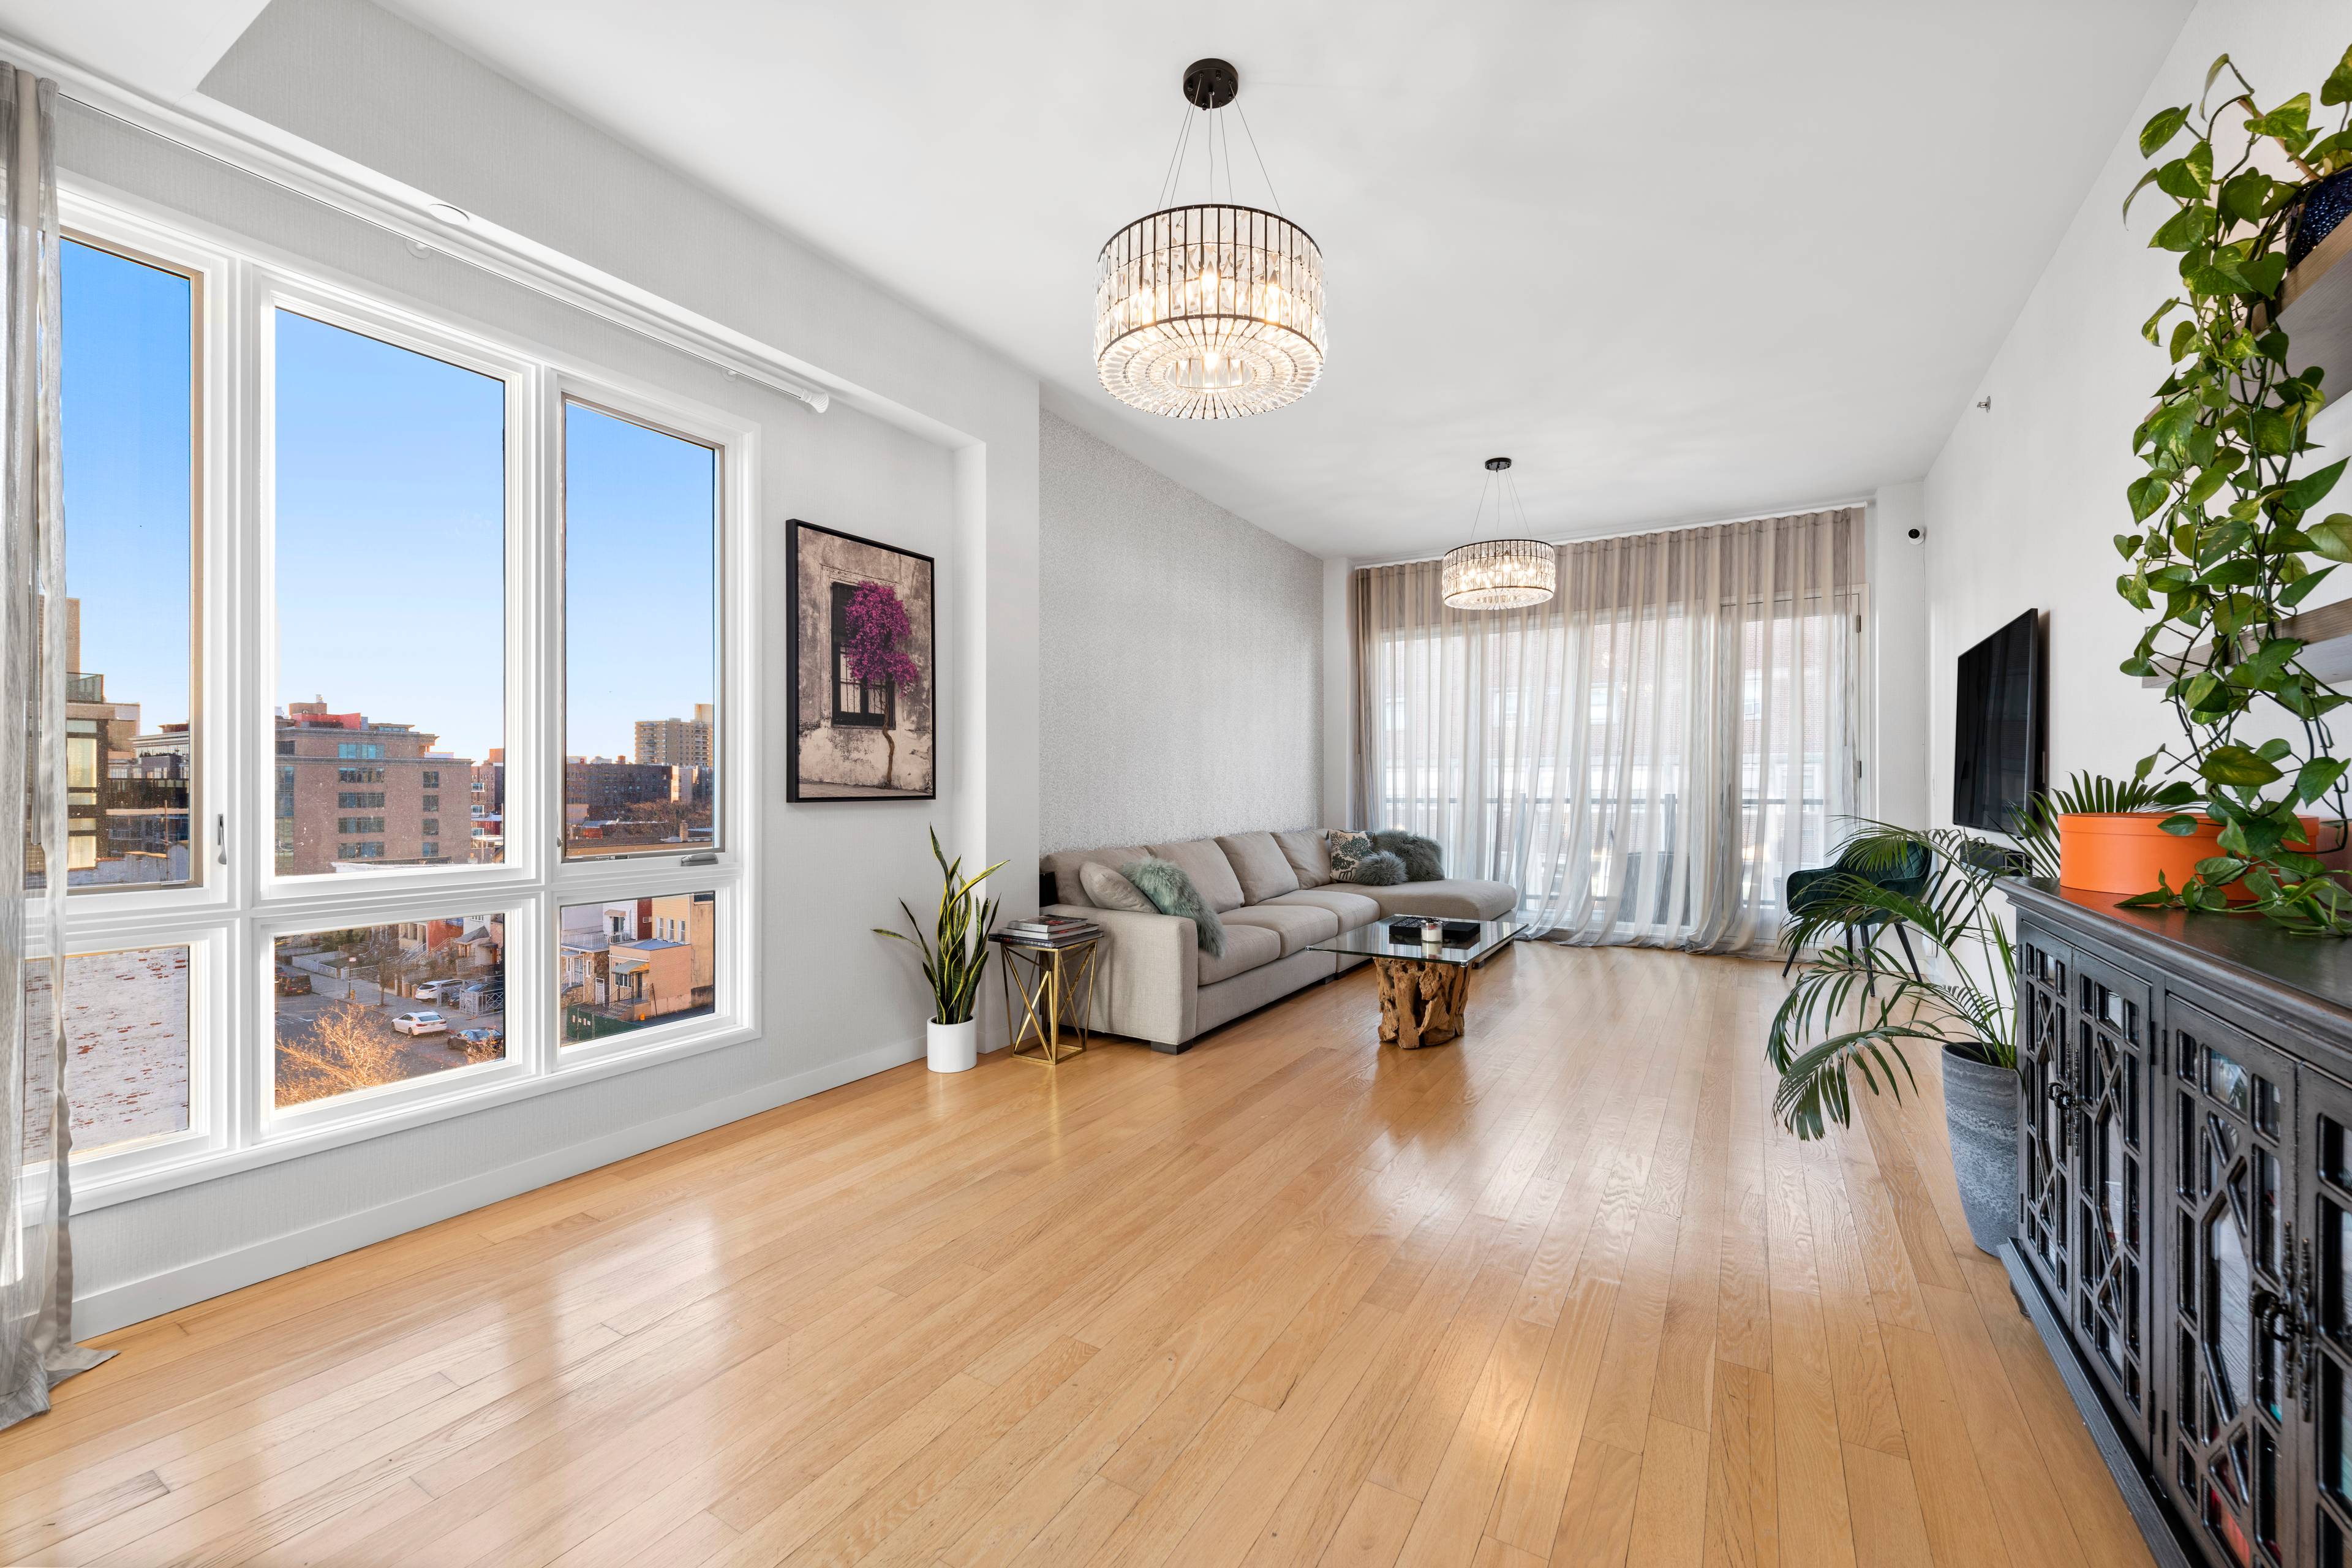 Comfort and luxury await you at this stunning condominium in prime Manhattan Beach.